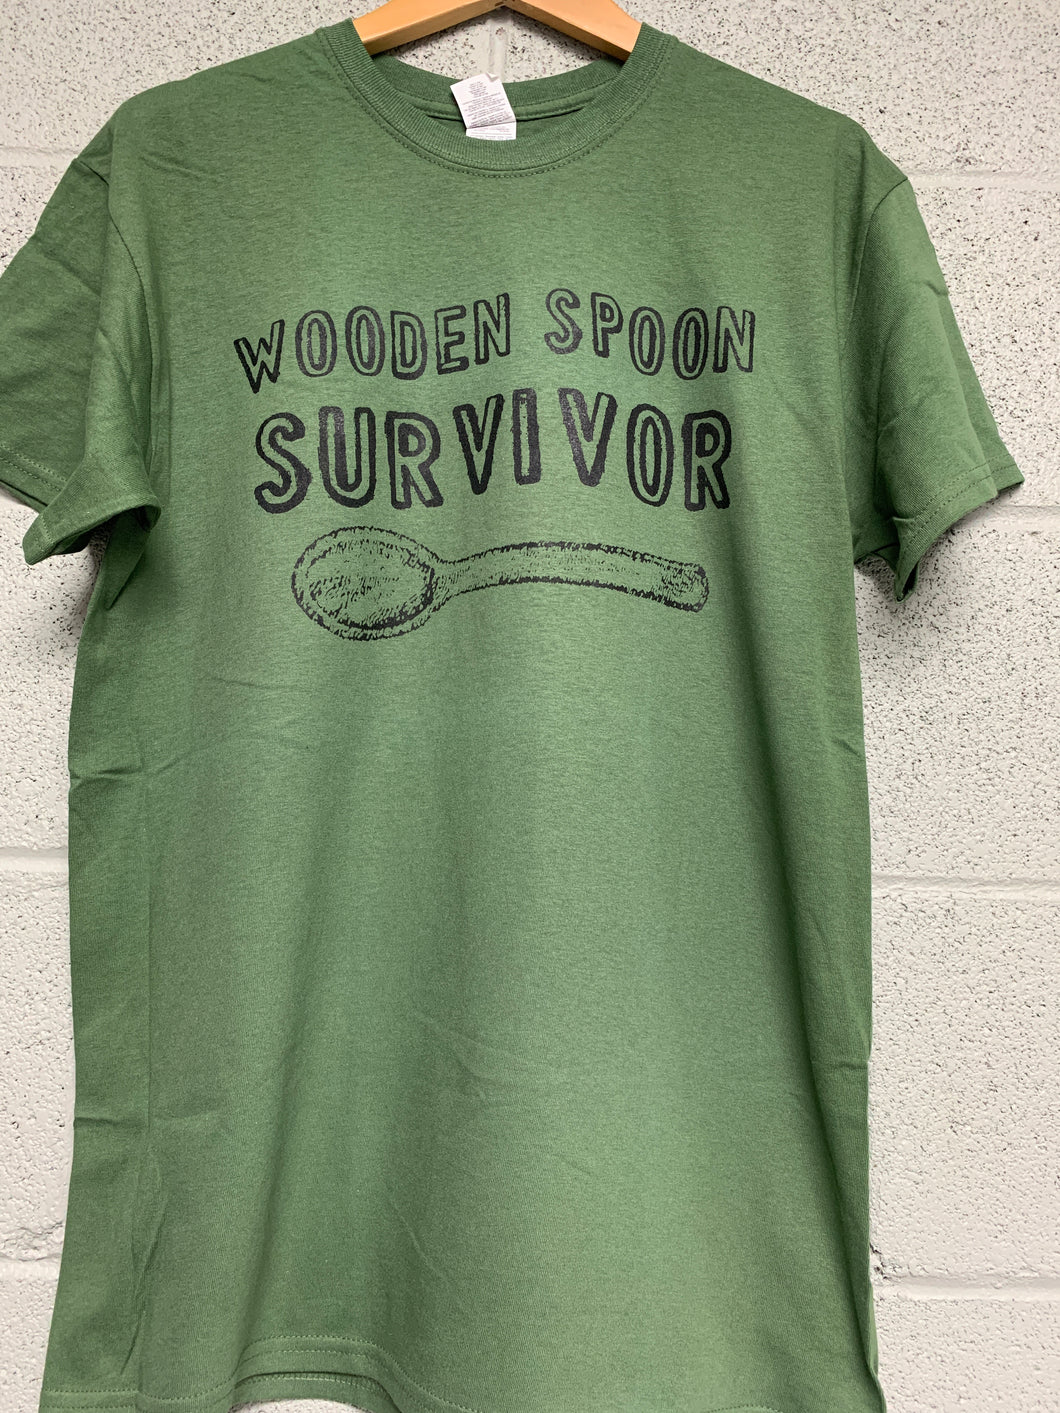 wooden spoon survivor shirt Military Green